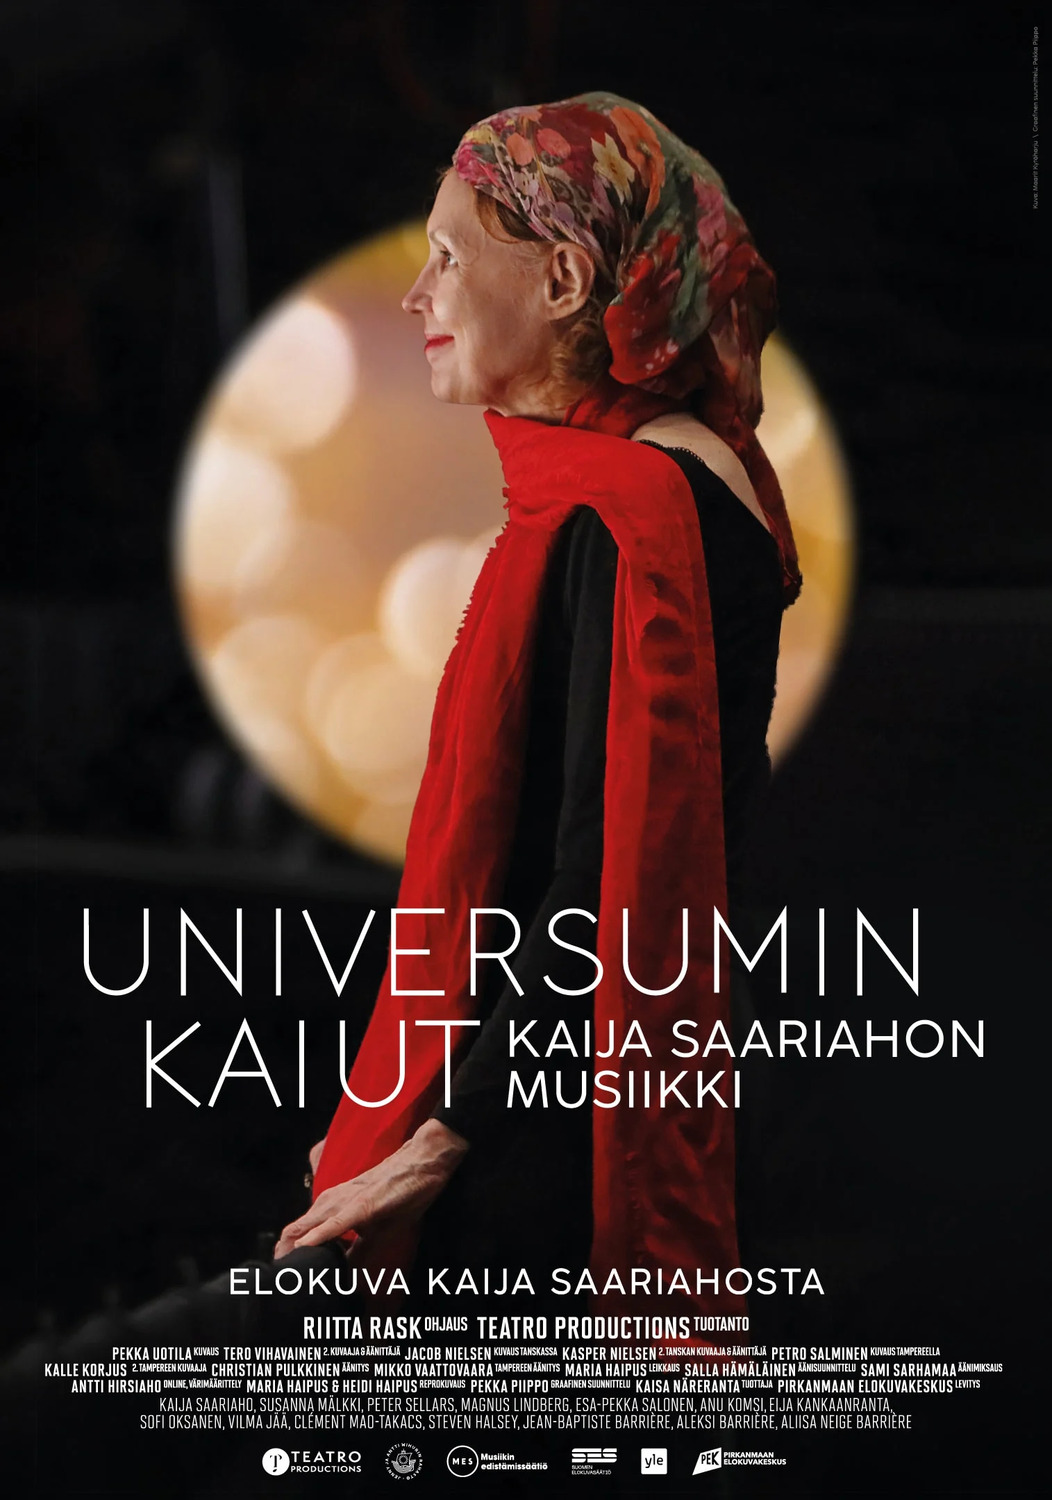 Extra Large Movie Poster Image for Universumin kaiut - Kaija Saariahon musiikki 